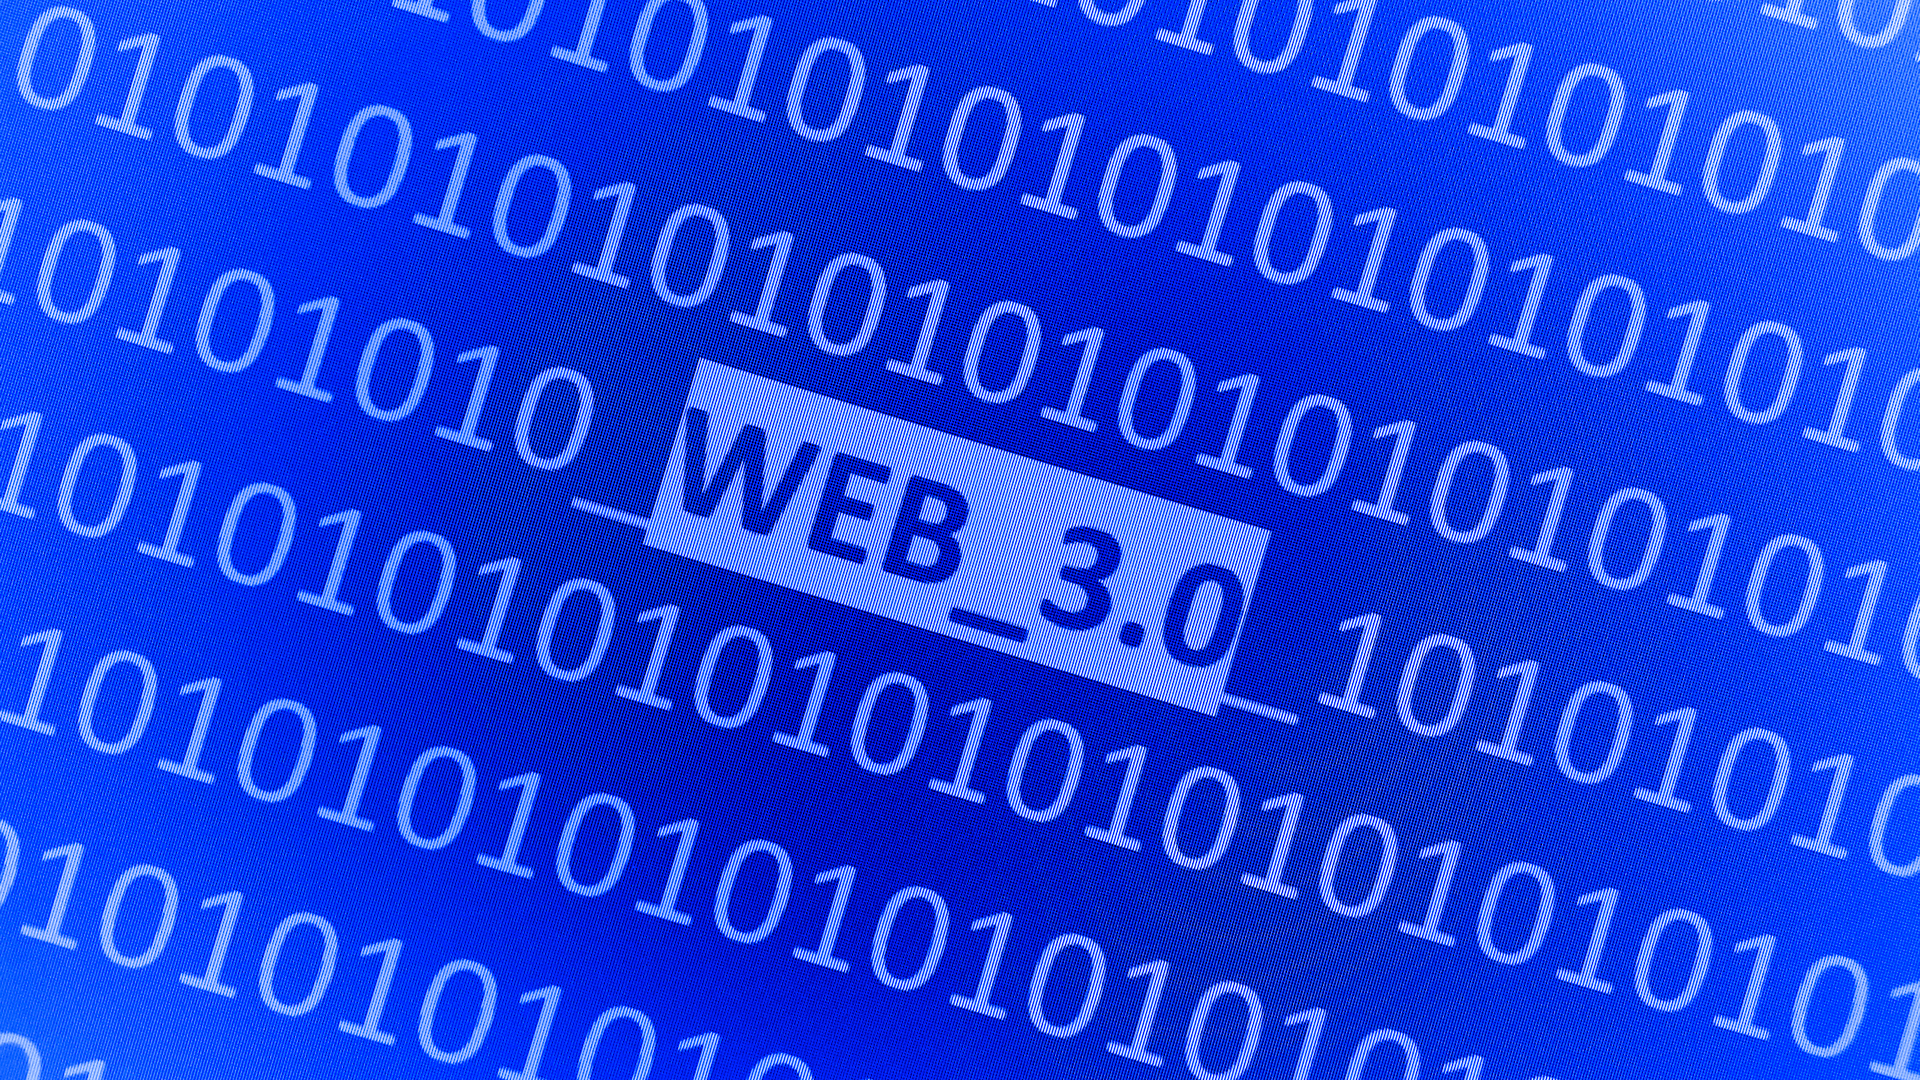 Apa yang dimaksud Web 3.0 untuk pengumpulan dan keamanan data